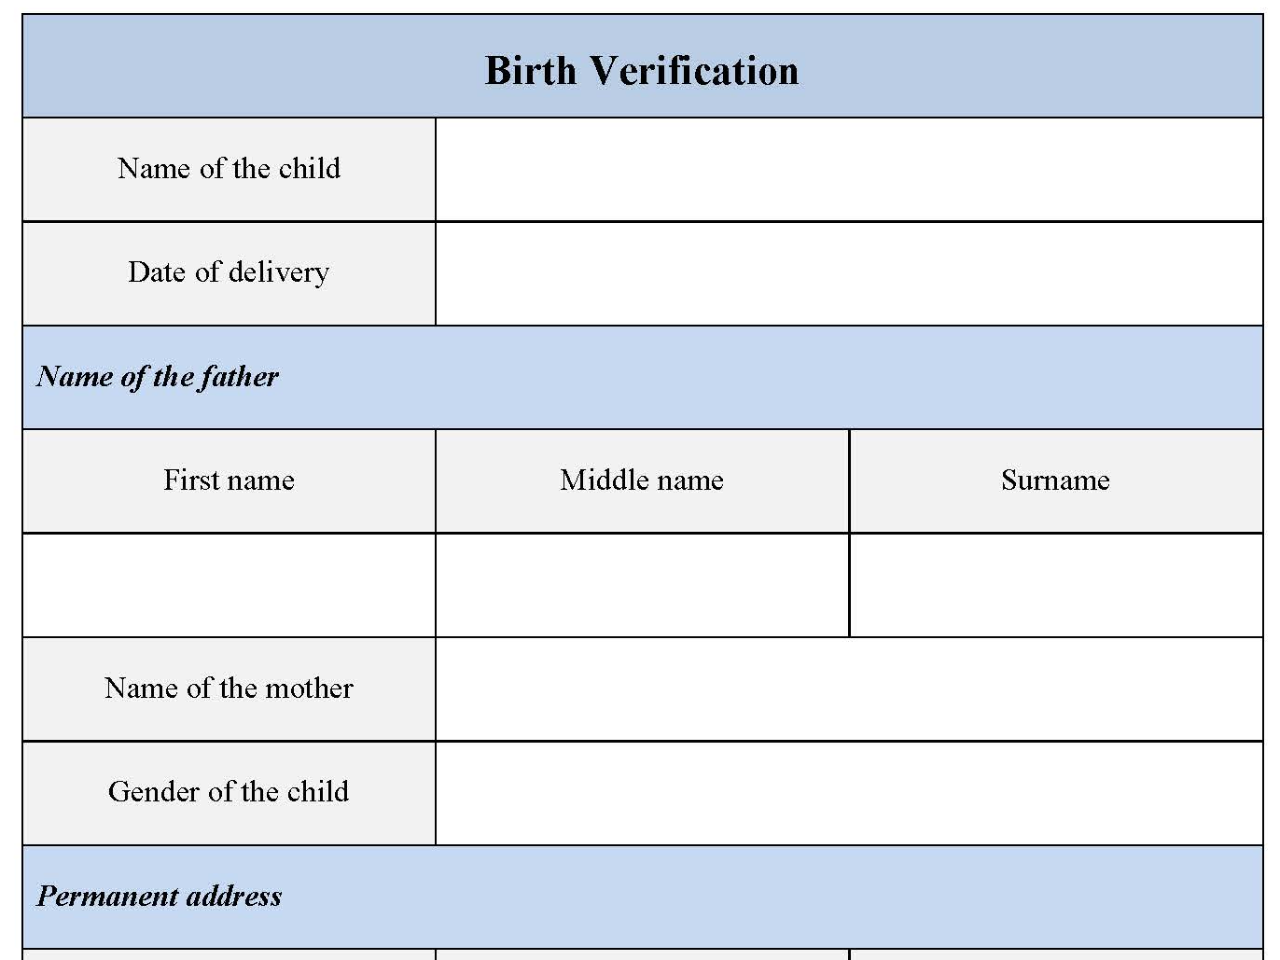 Birth Verification Form